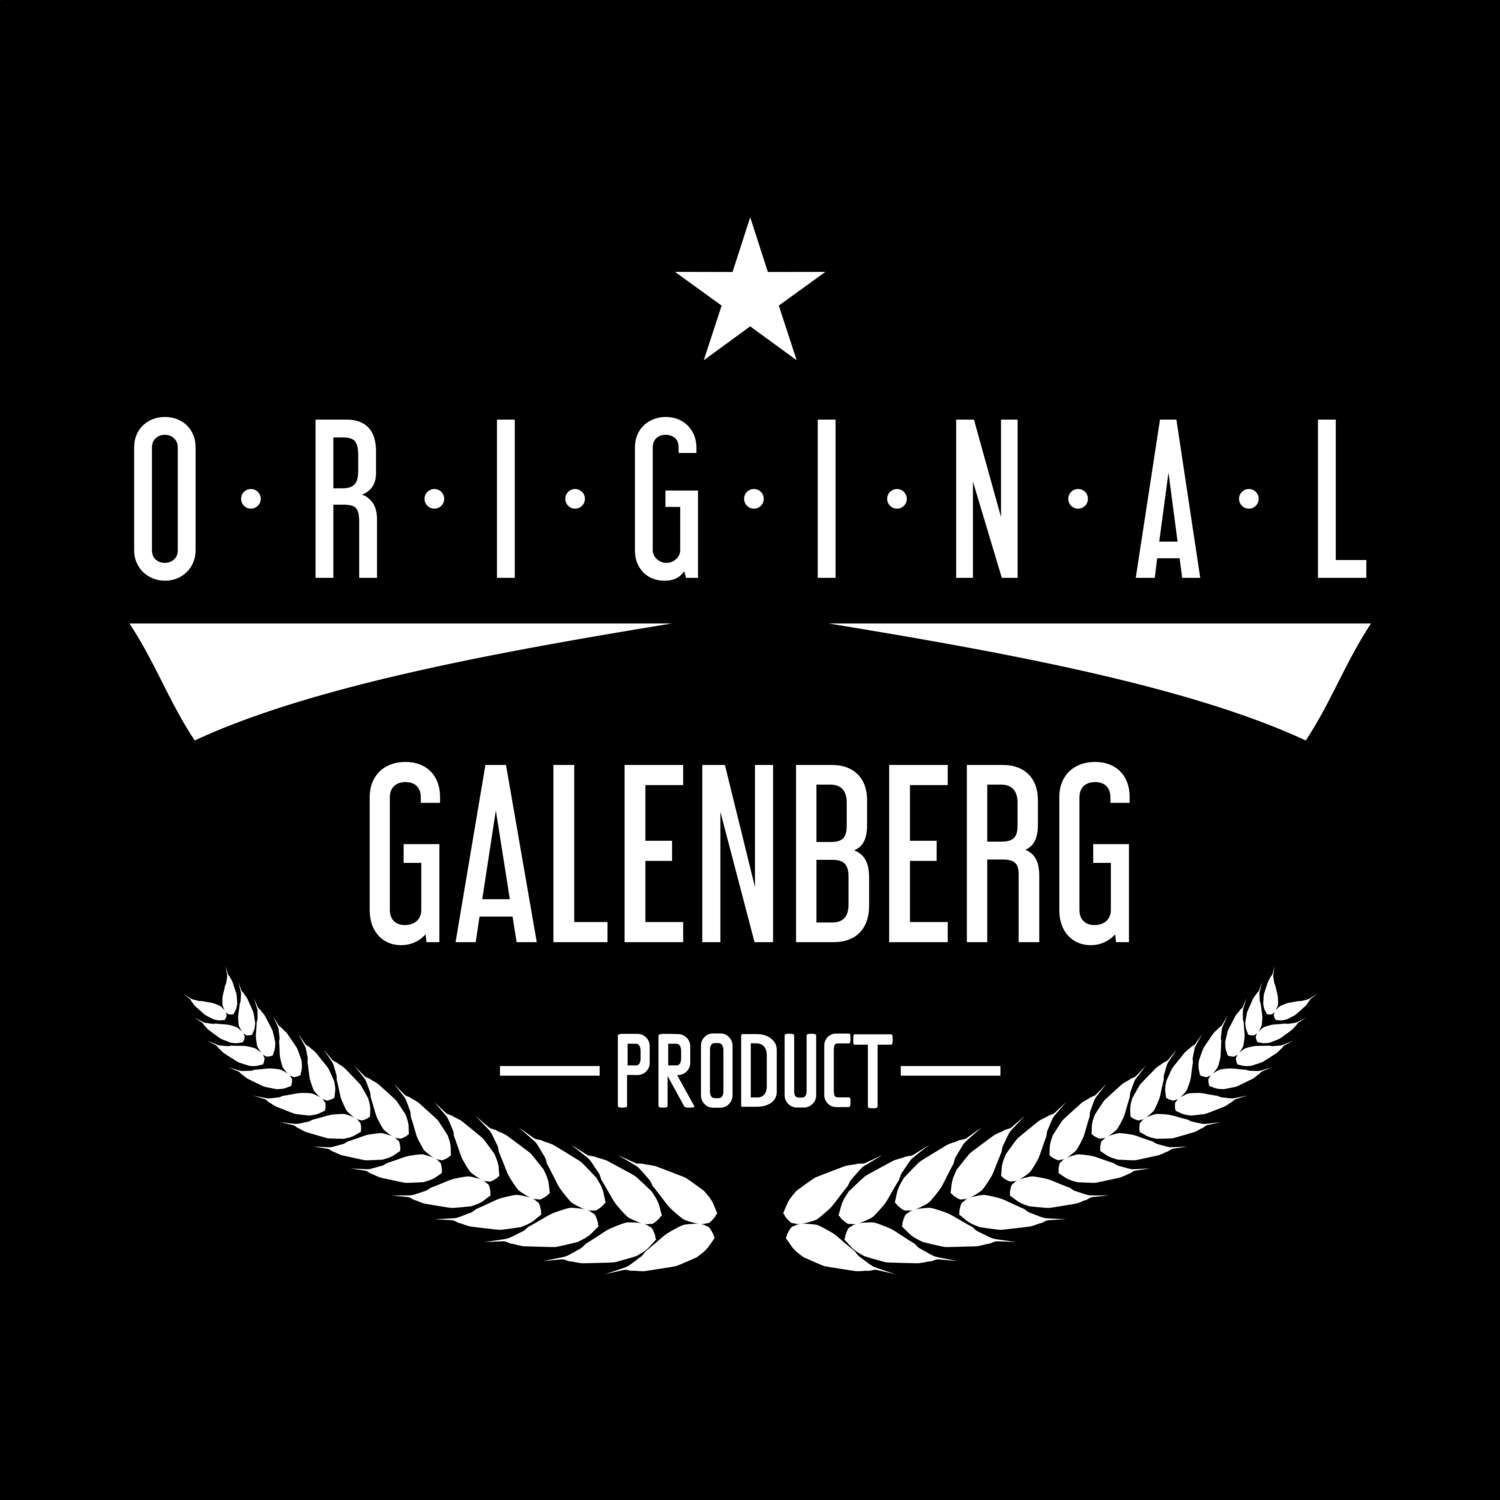 Galenberg T-Shirt »Original Product«